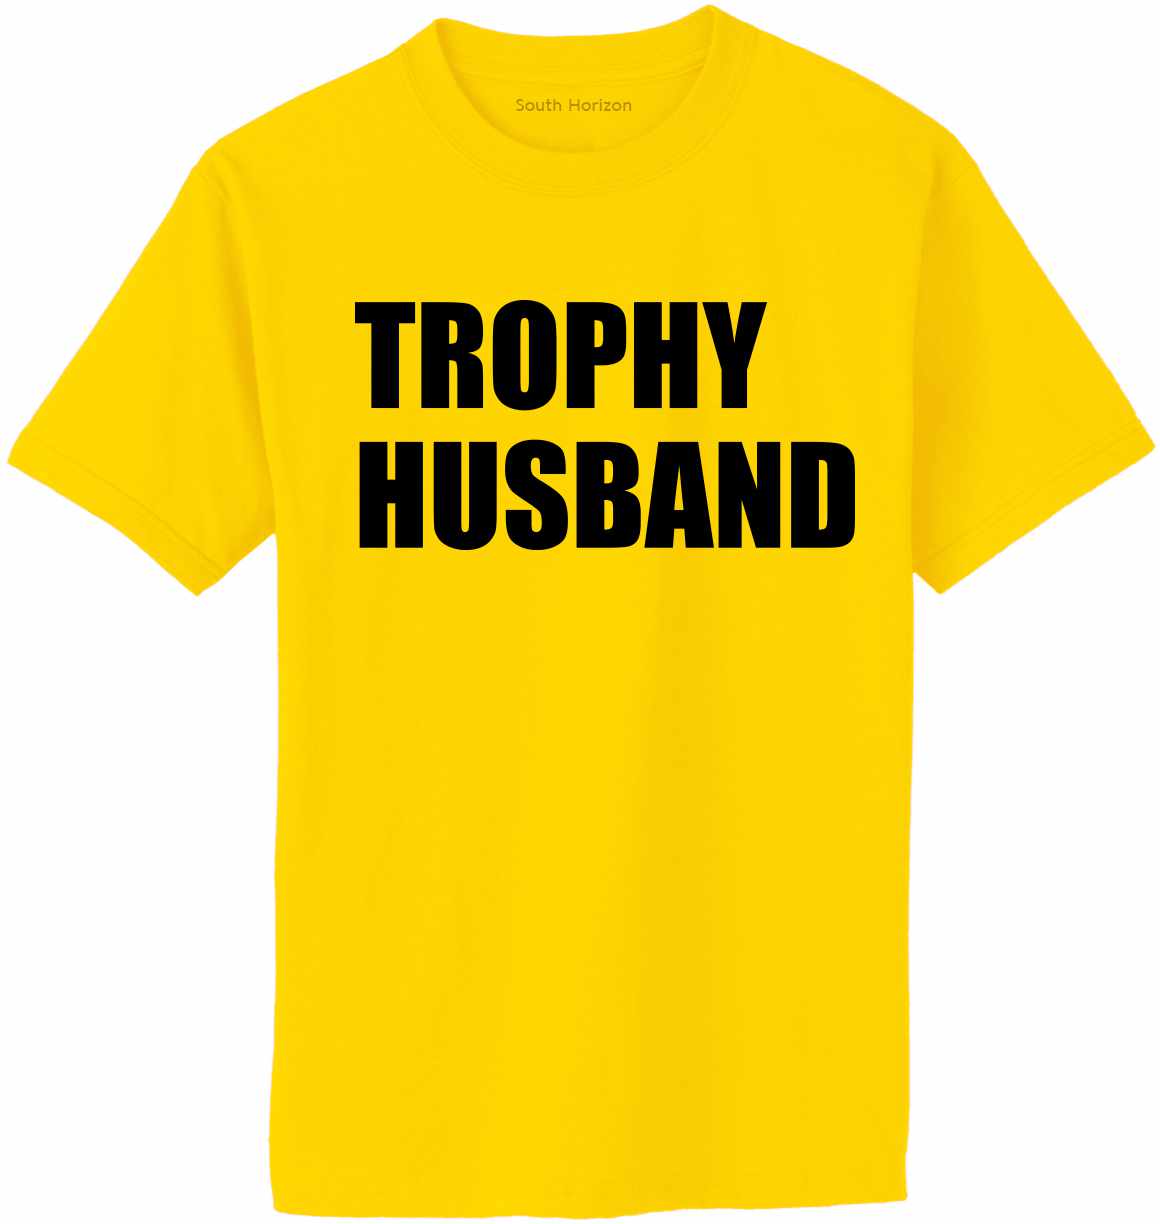 Trophy Husband on Adult T-Shirt (#1326-1)